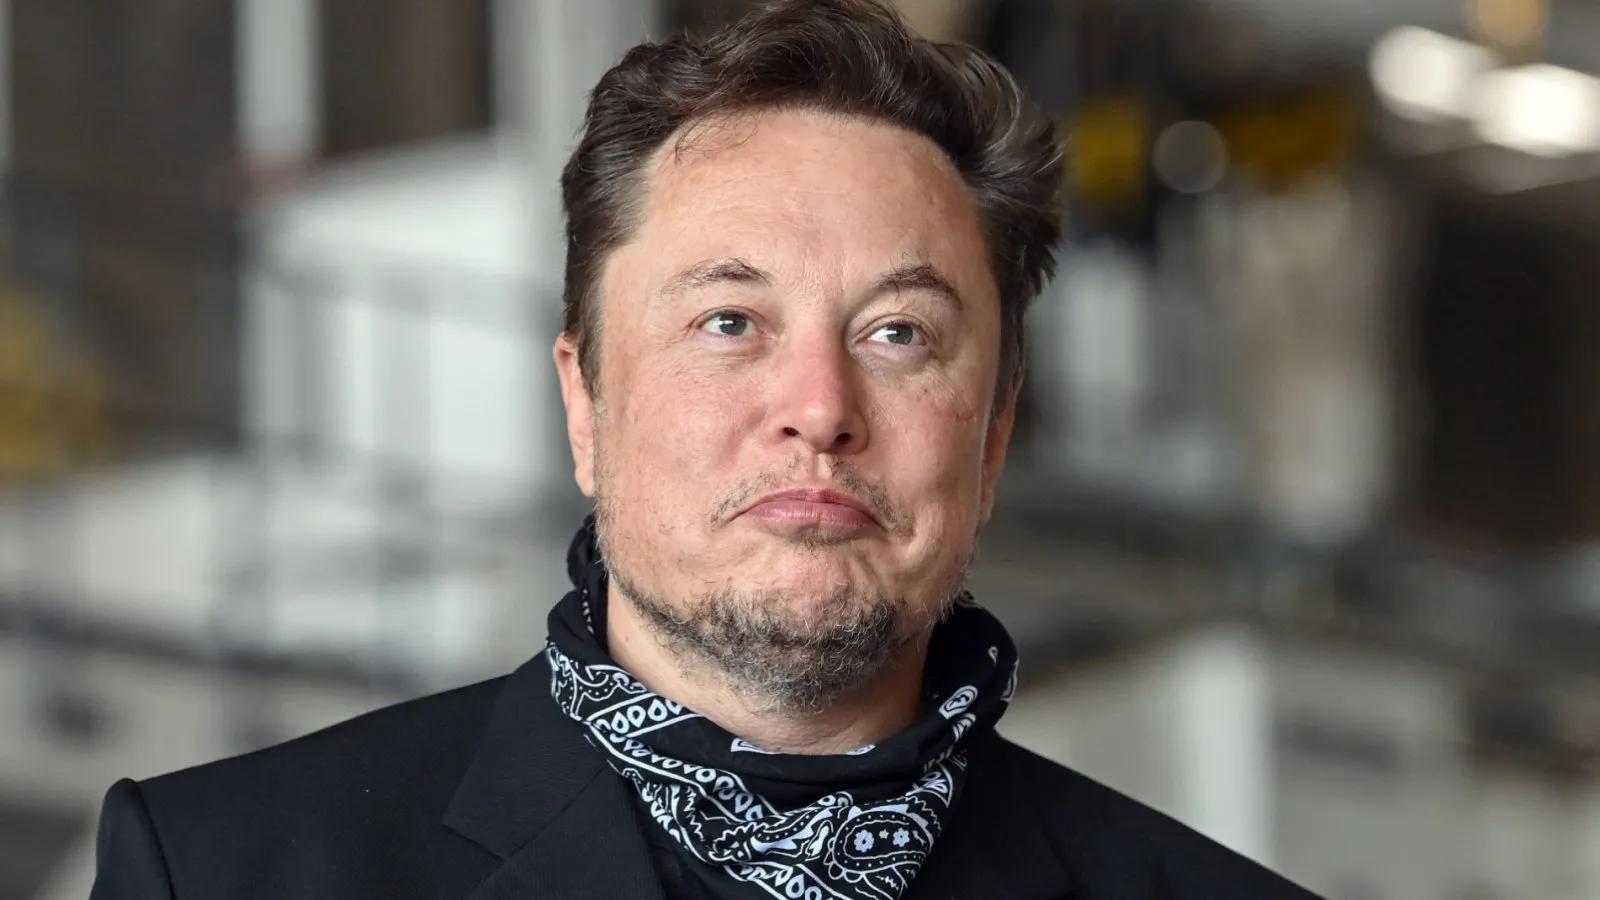 Elon Musk. Image: Shutterstock